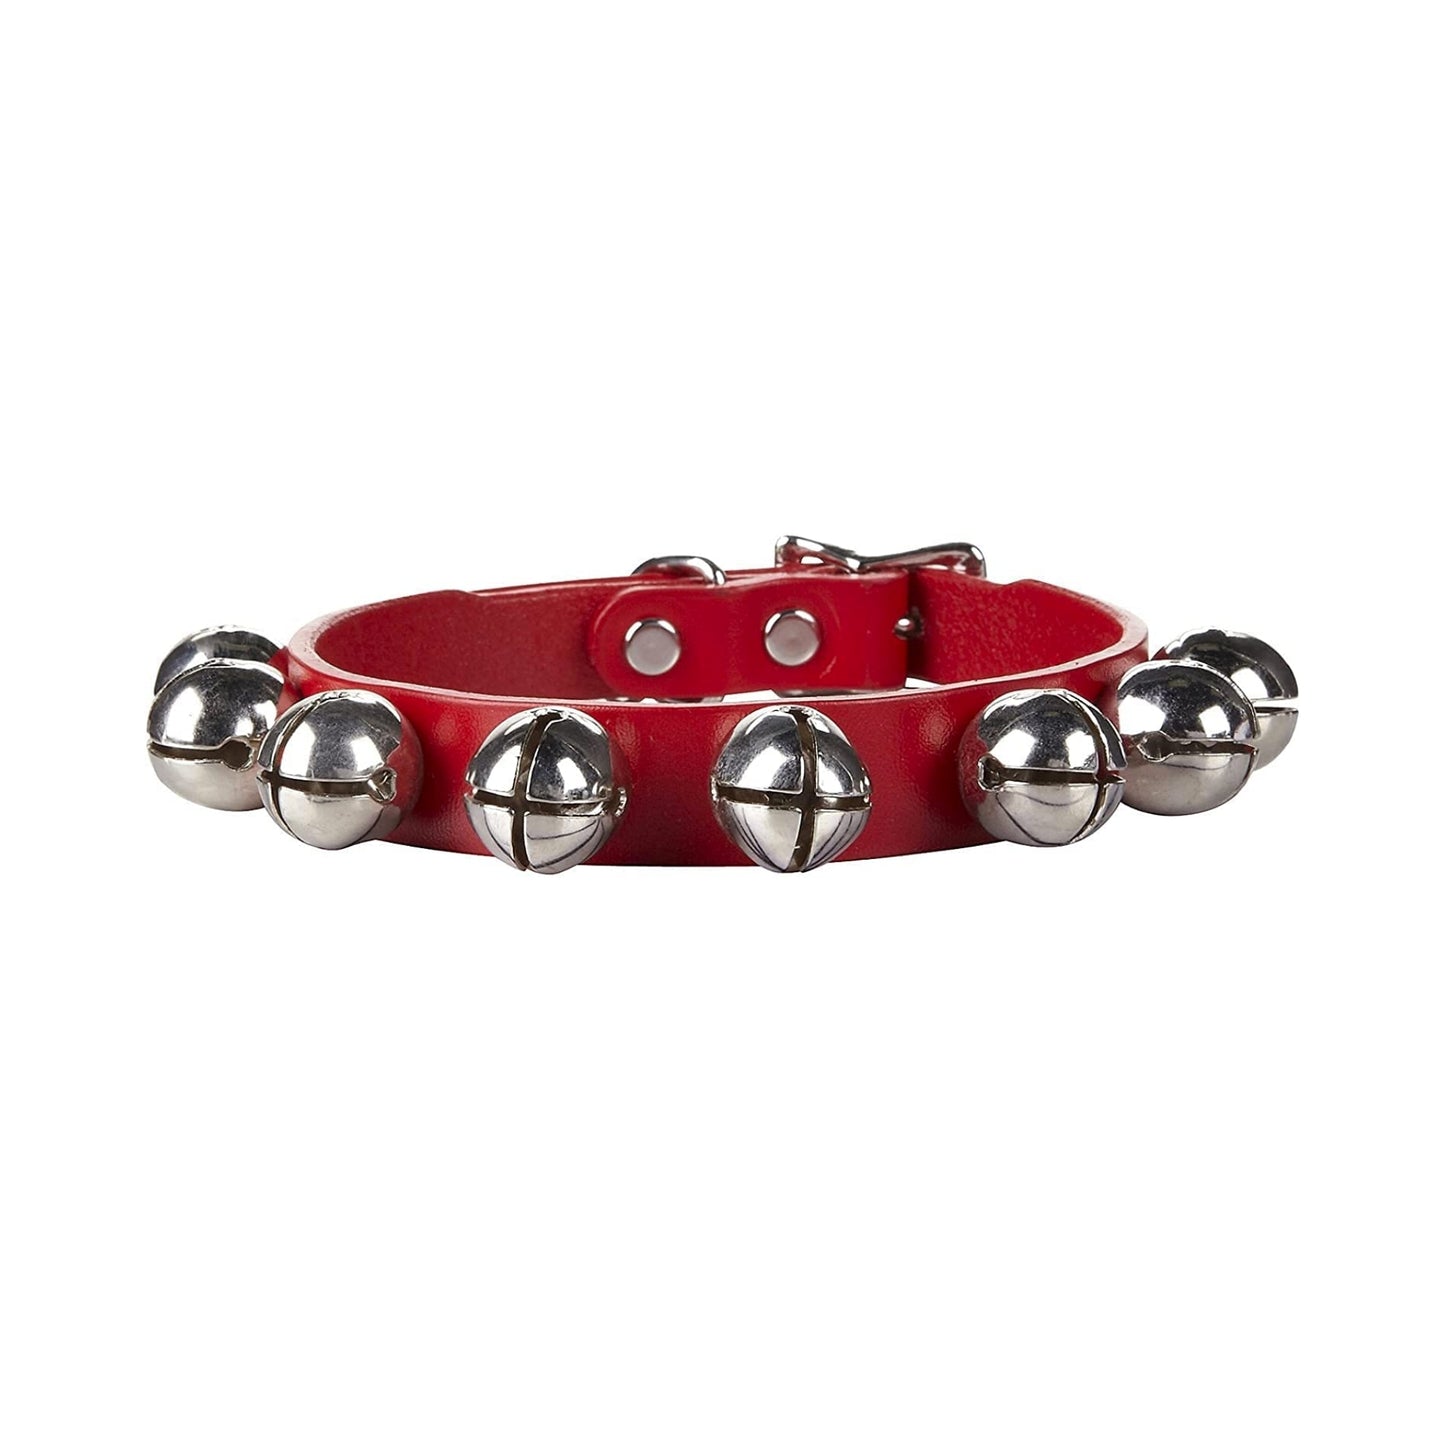 Auburn Leather Red Jingle Bells Christmas Pet Dog Collar 5/8" x 16"